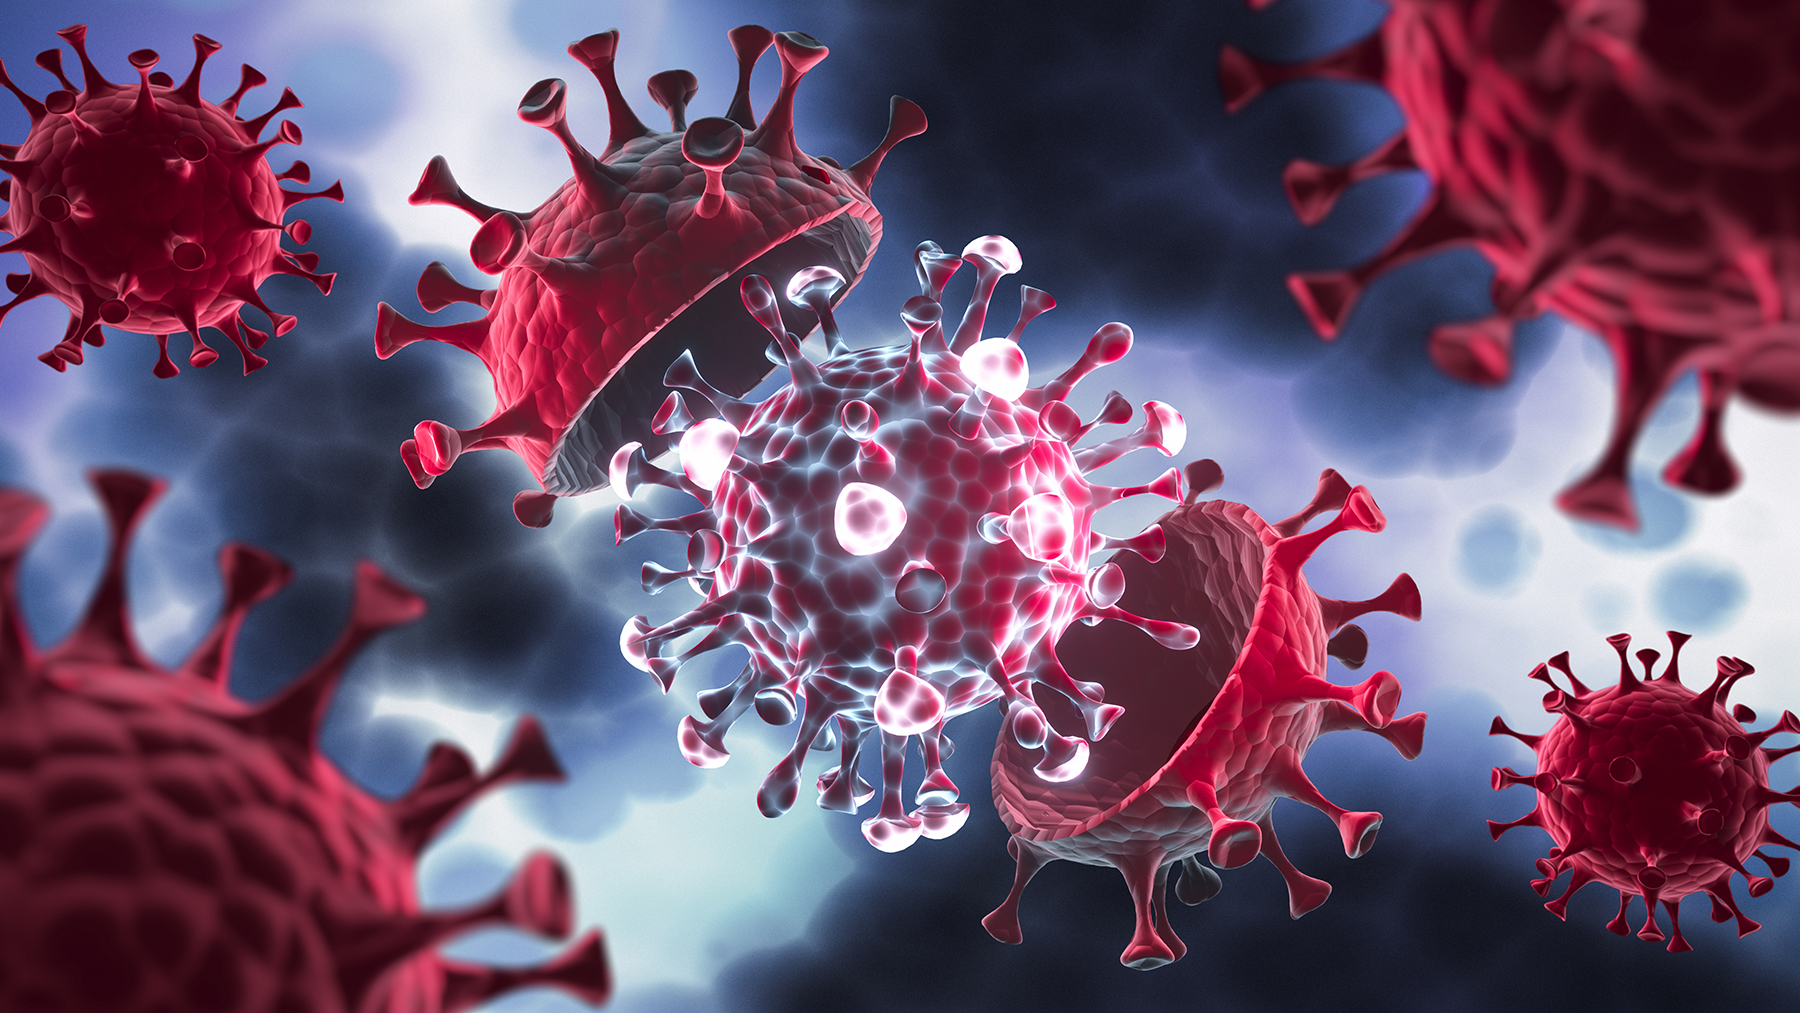 Spread of new Coronavirus variant raises concern in the U.S and India